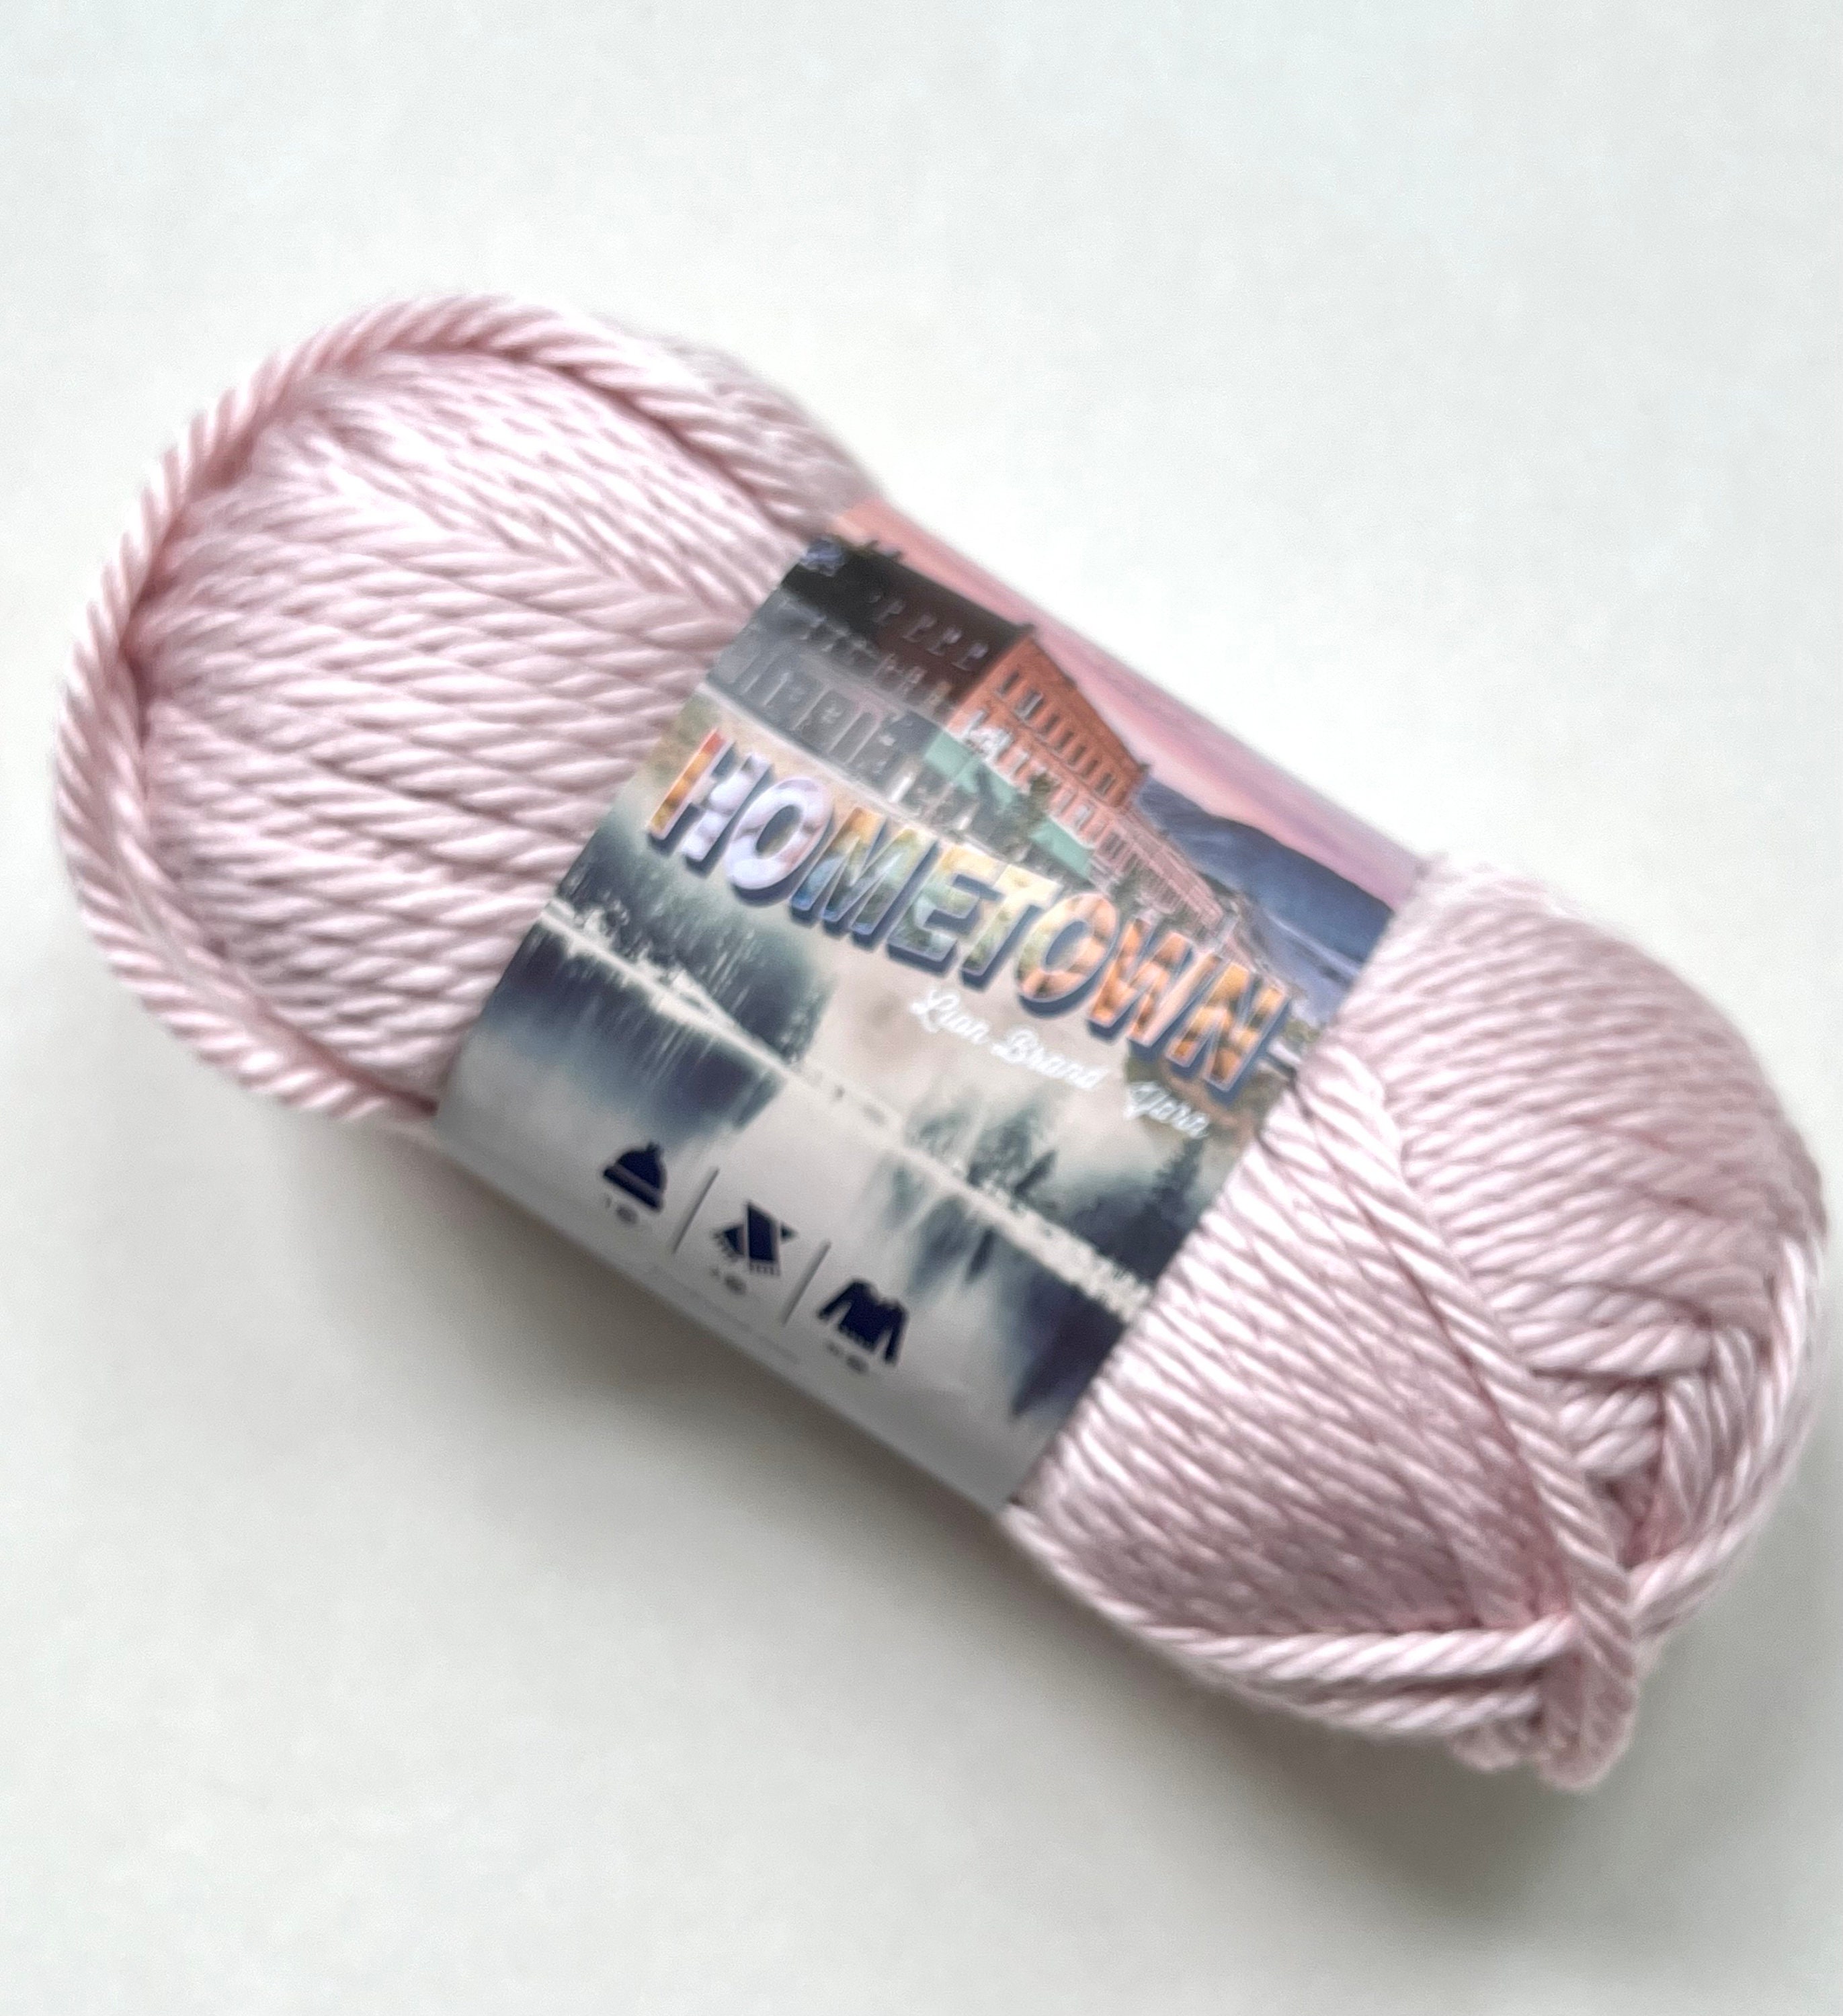 Hometown Lion Brand Yarn in Quartz Dillon, Light Pink Bulky Acrylic Yarn 